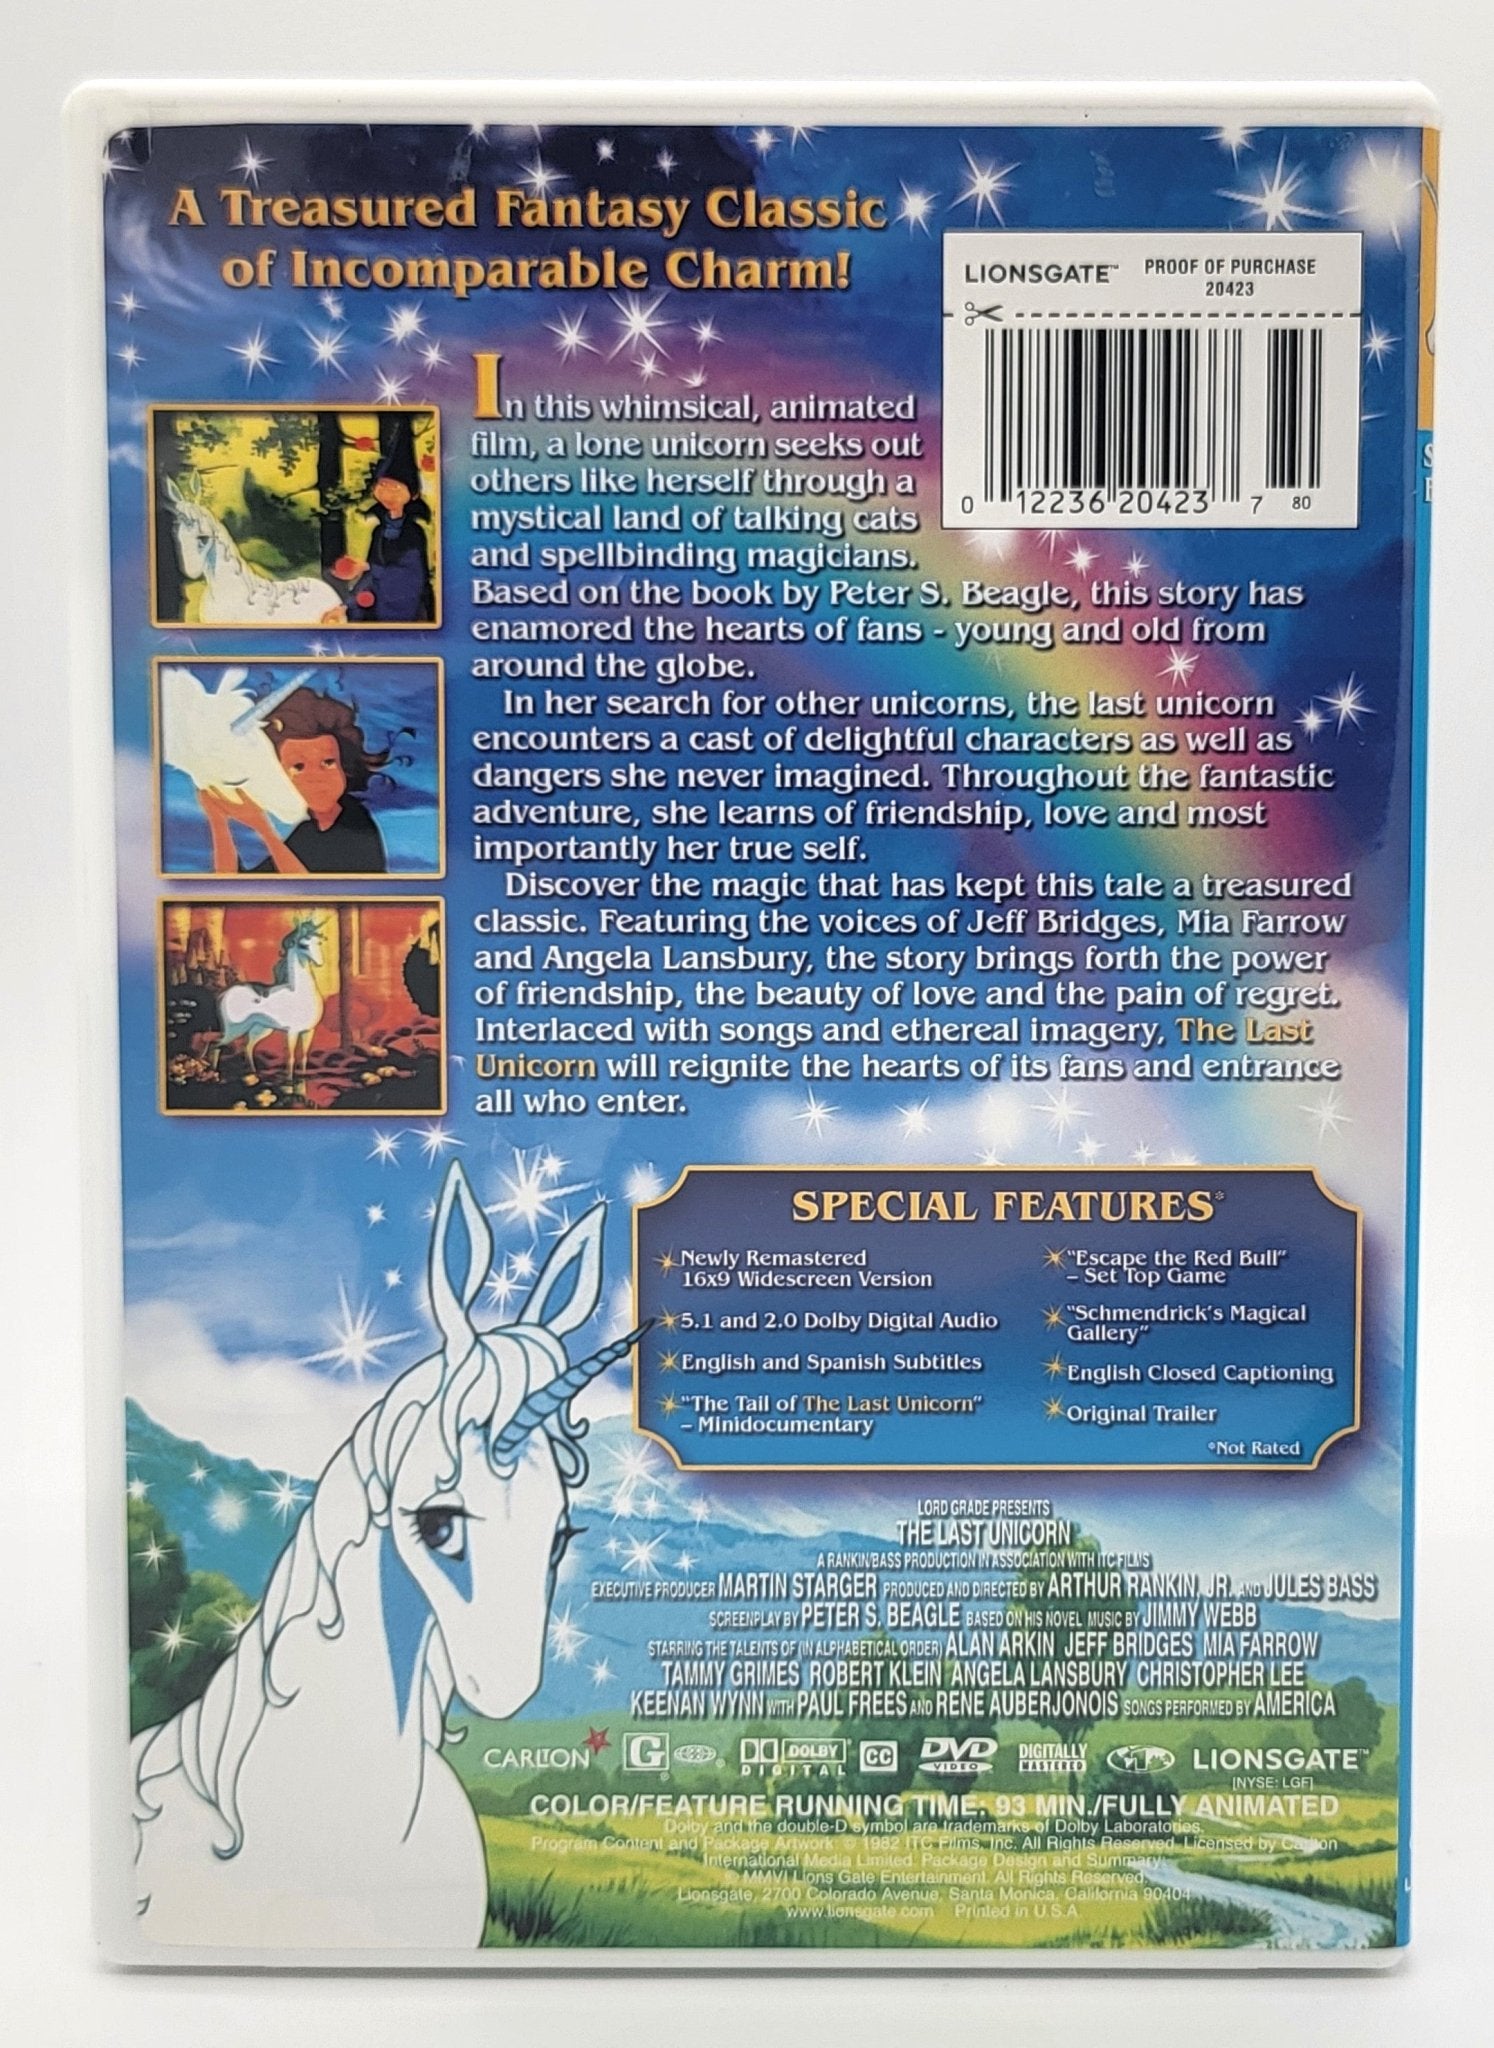 Lionsgate Home Entertainment - The Last Unicorn | DVD | 25th Anniversary Edition - DVD - Steady Bunny Shop